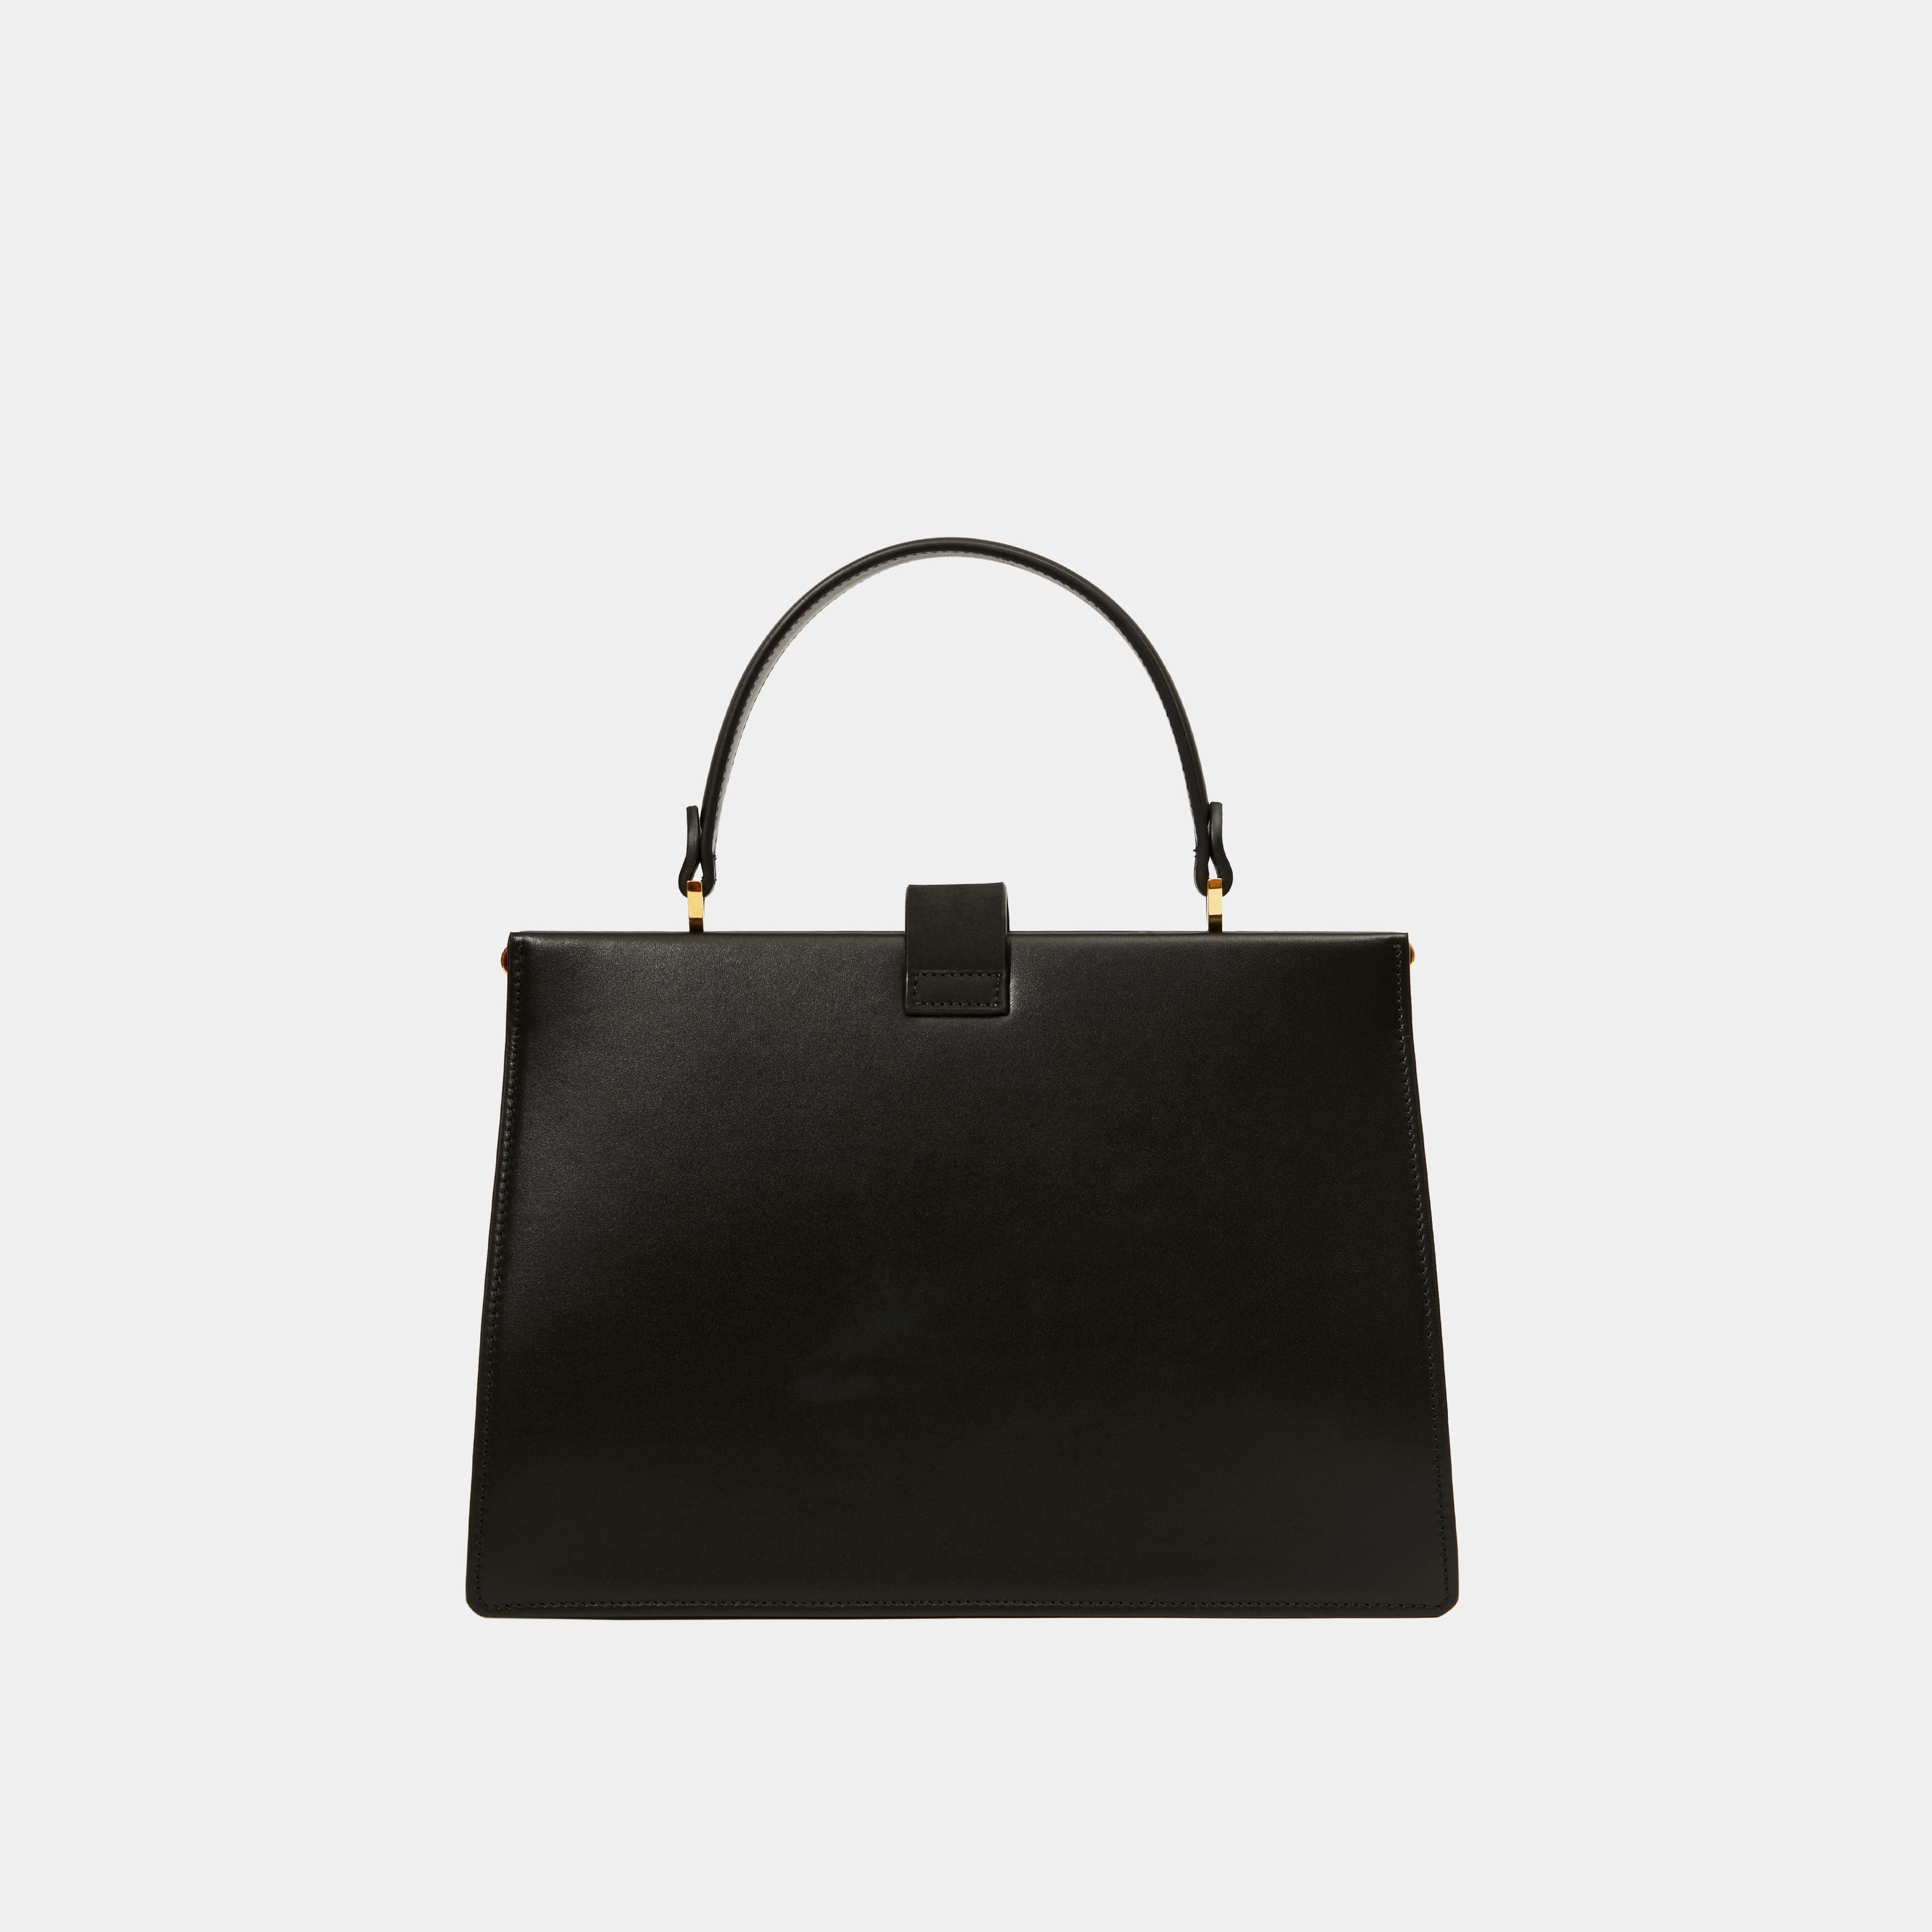 Le sac Elegant - Léo et Violette #black